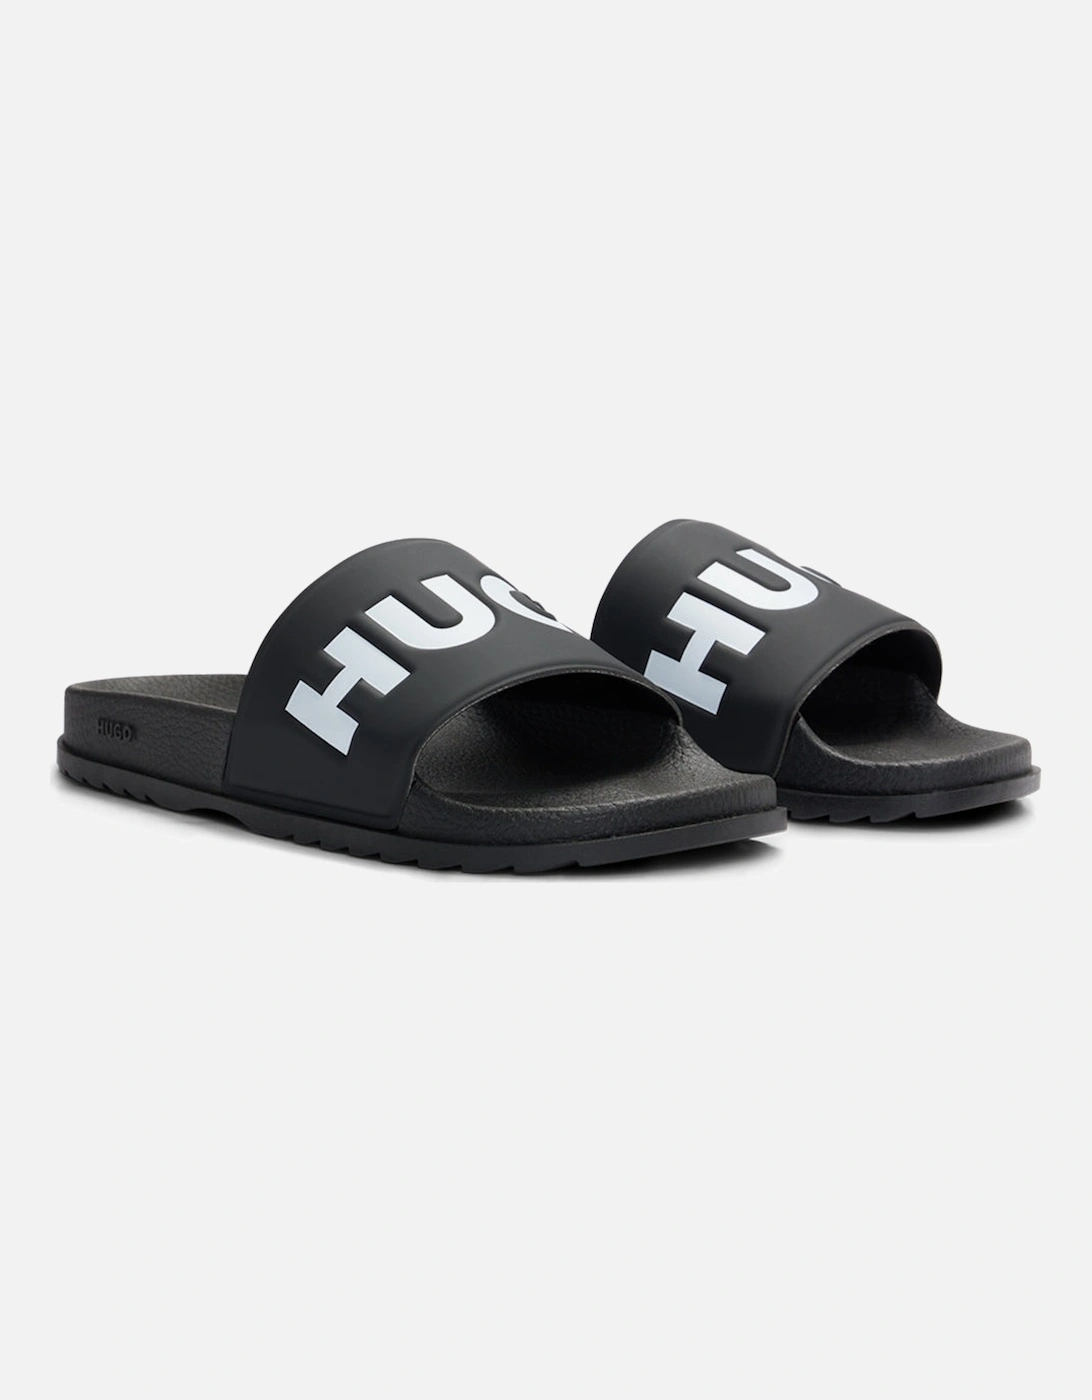 Match Slider Sandals, Black/White, 10 of 9